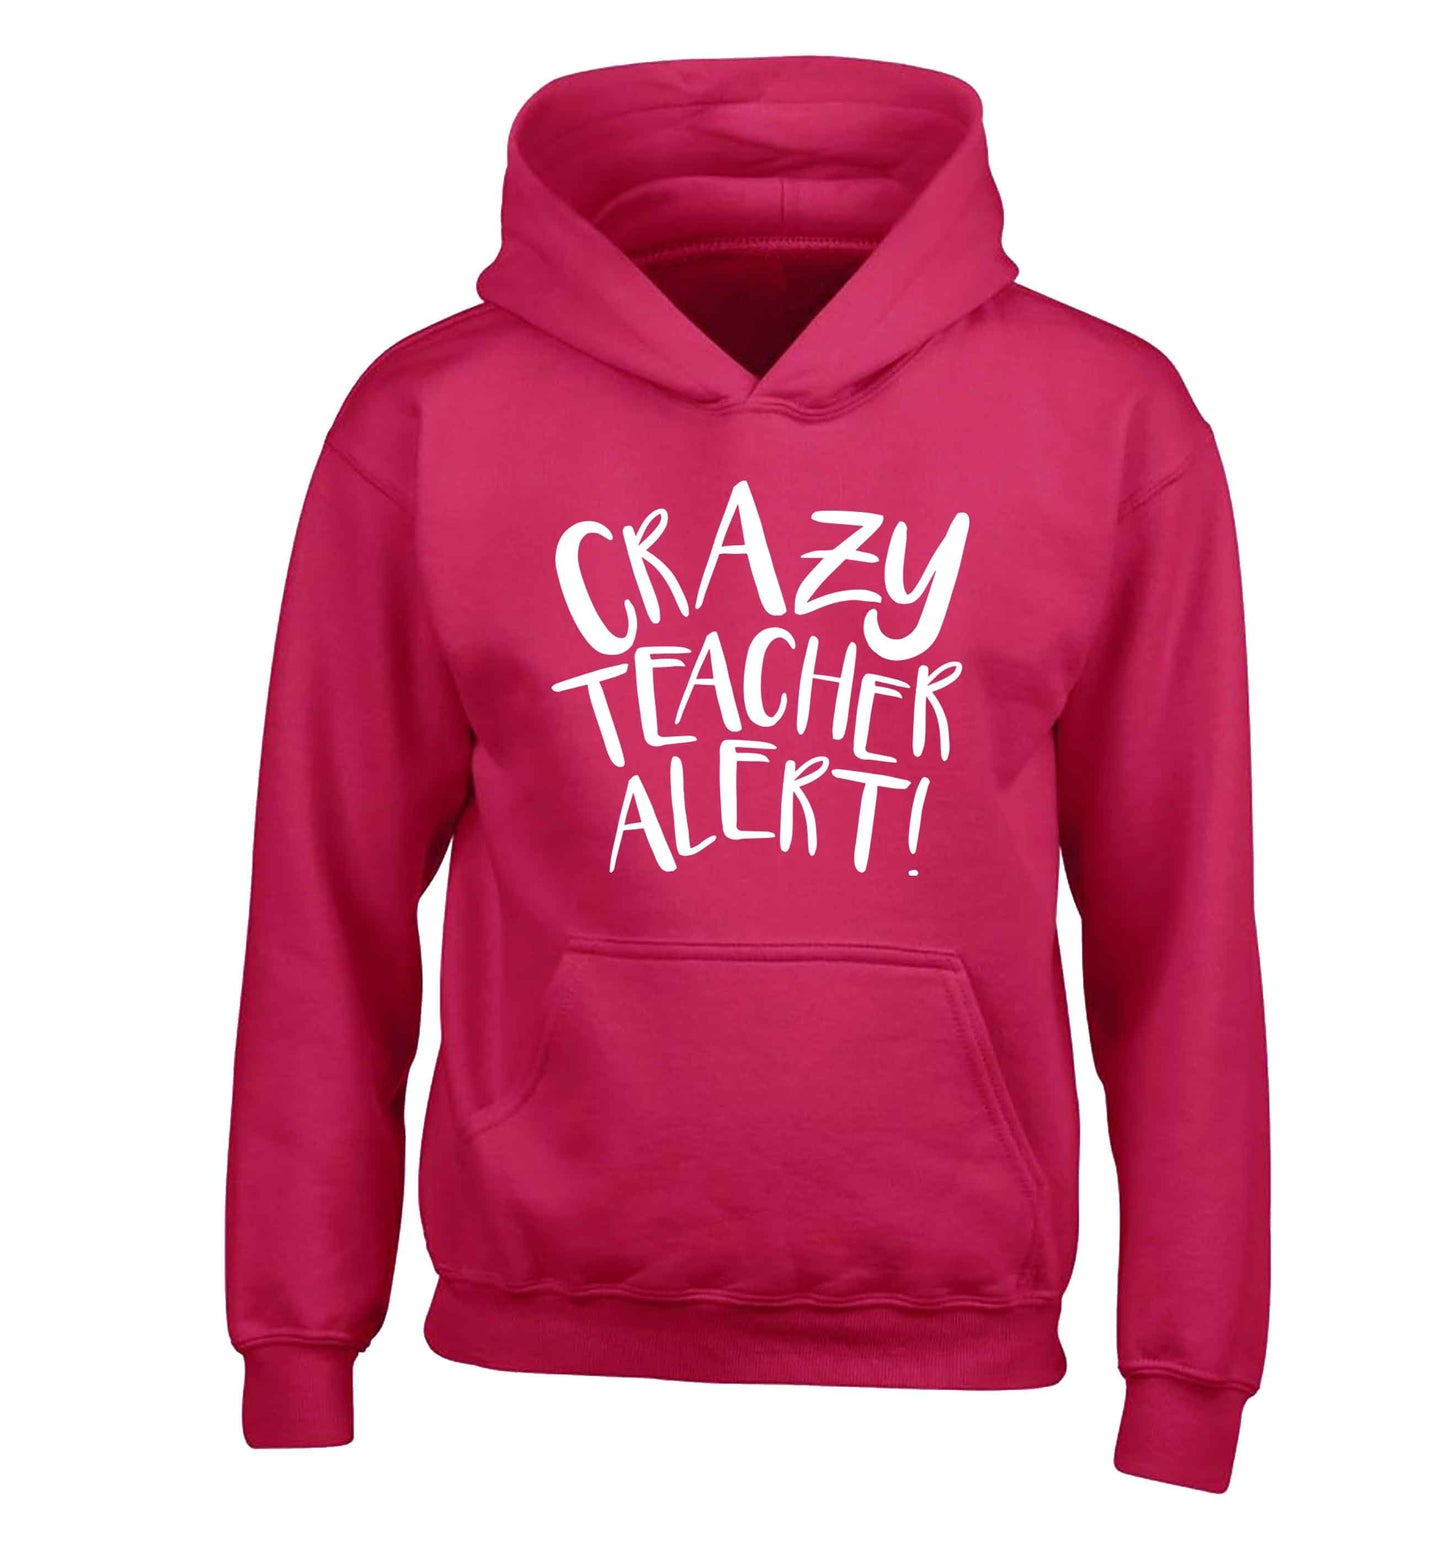 Crazy teacher alert children's pink hoodie 12-13 Years